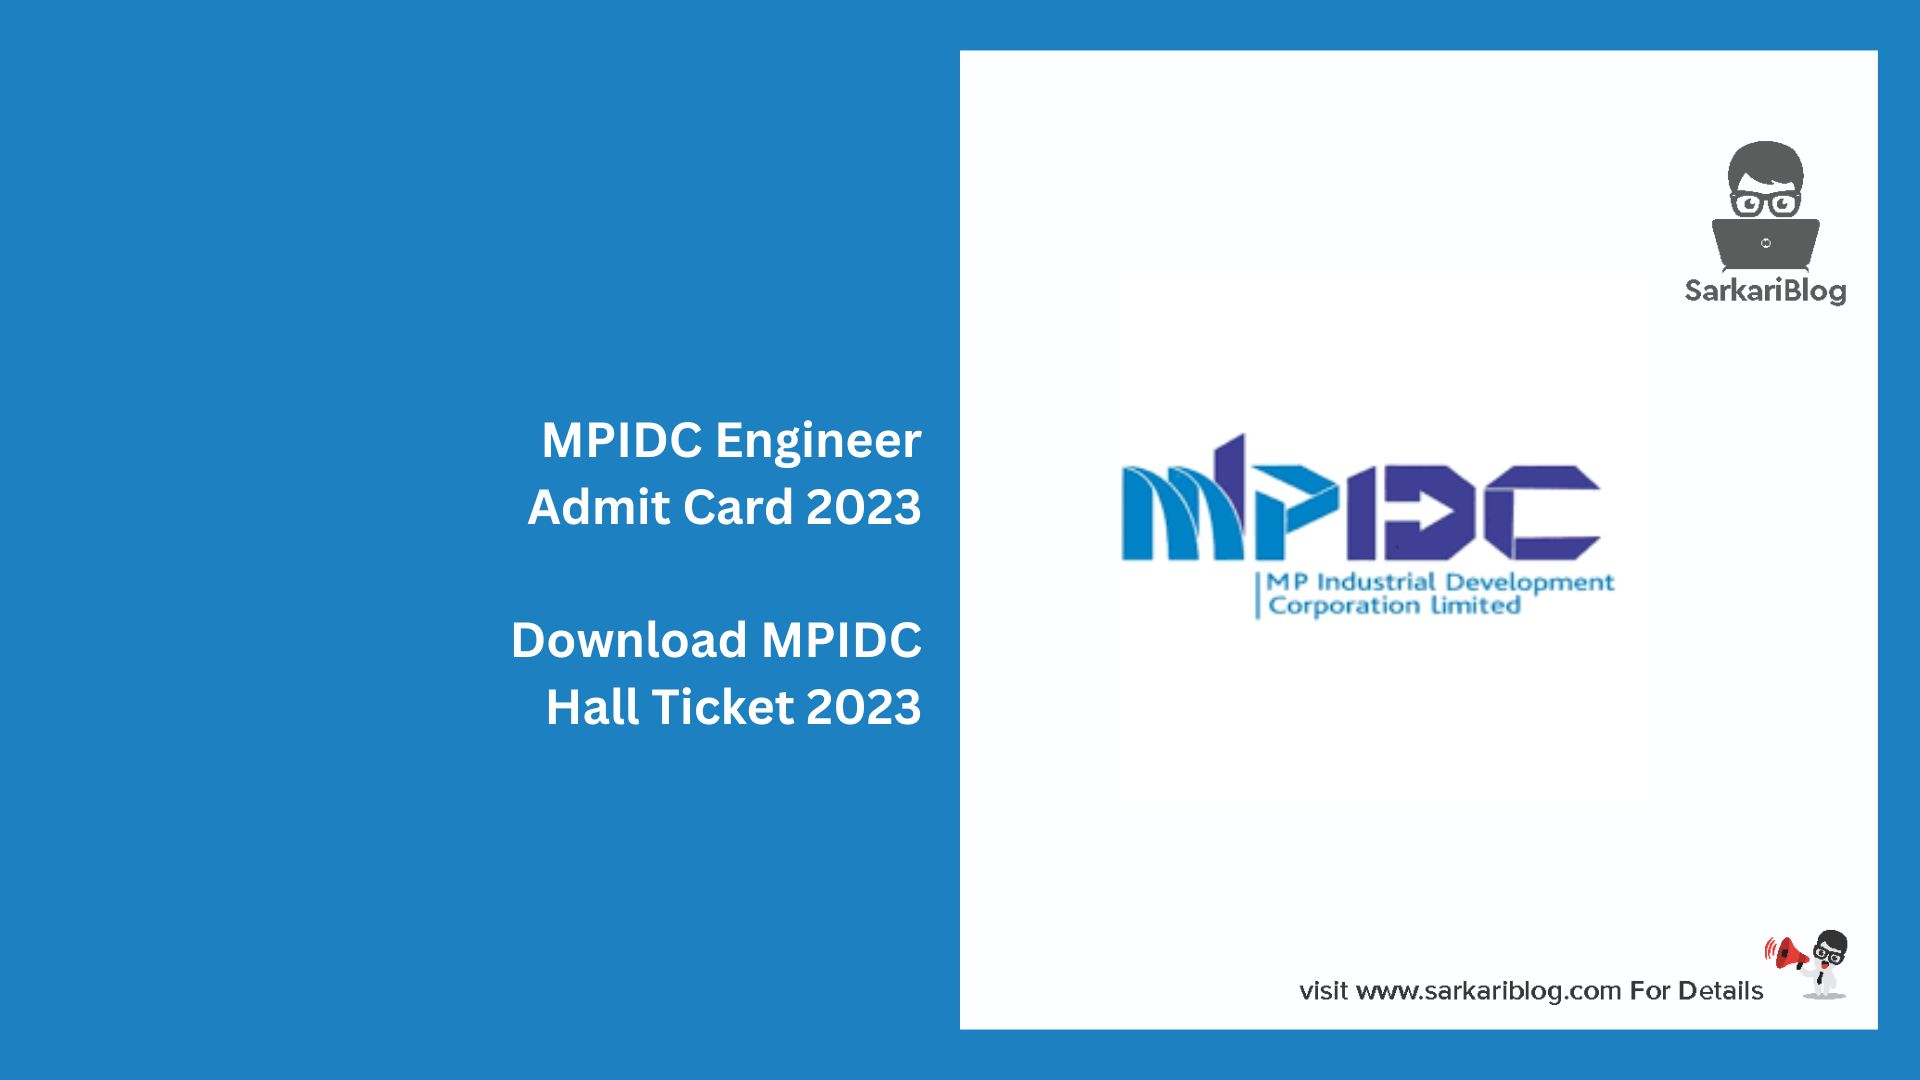 MPIDC Engineer Admit Card 2023